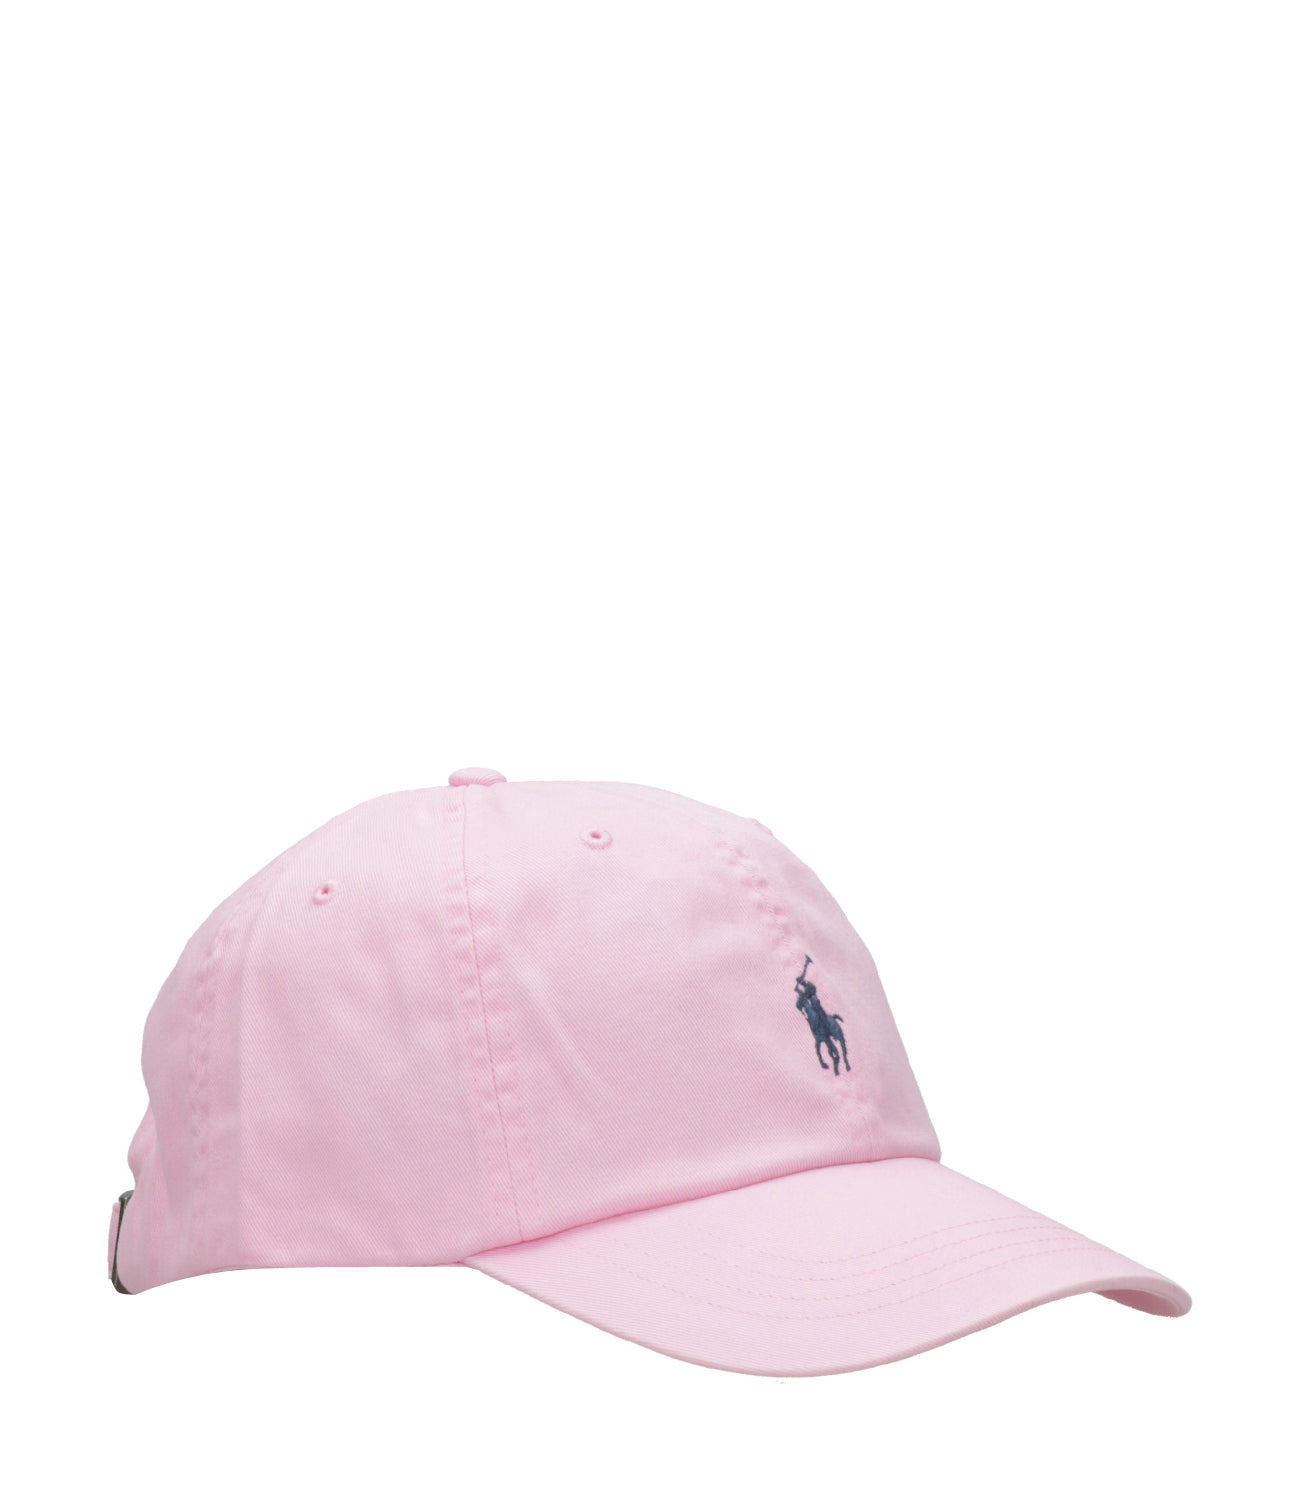 Polo Ralph Lauren | Pink Hat